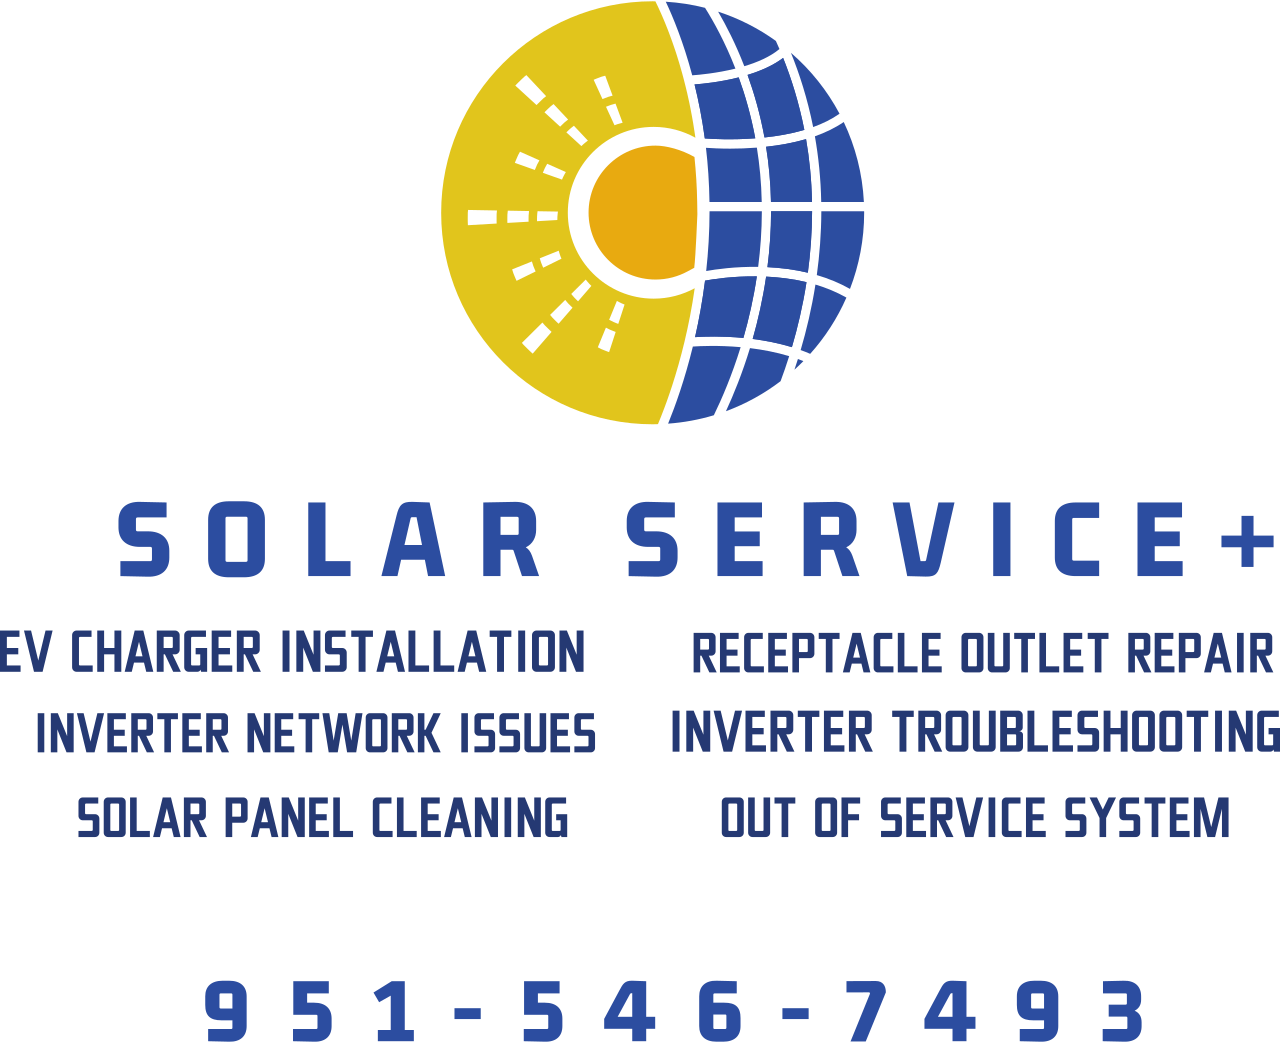 Solar Service+ 's logo